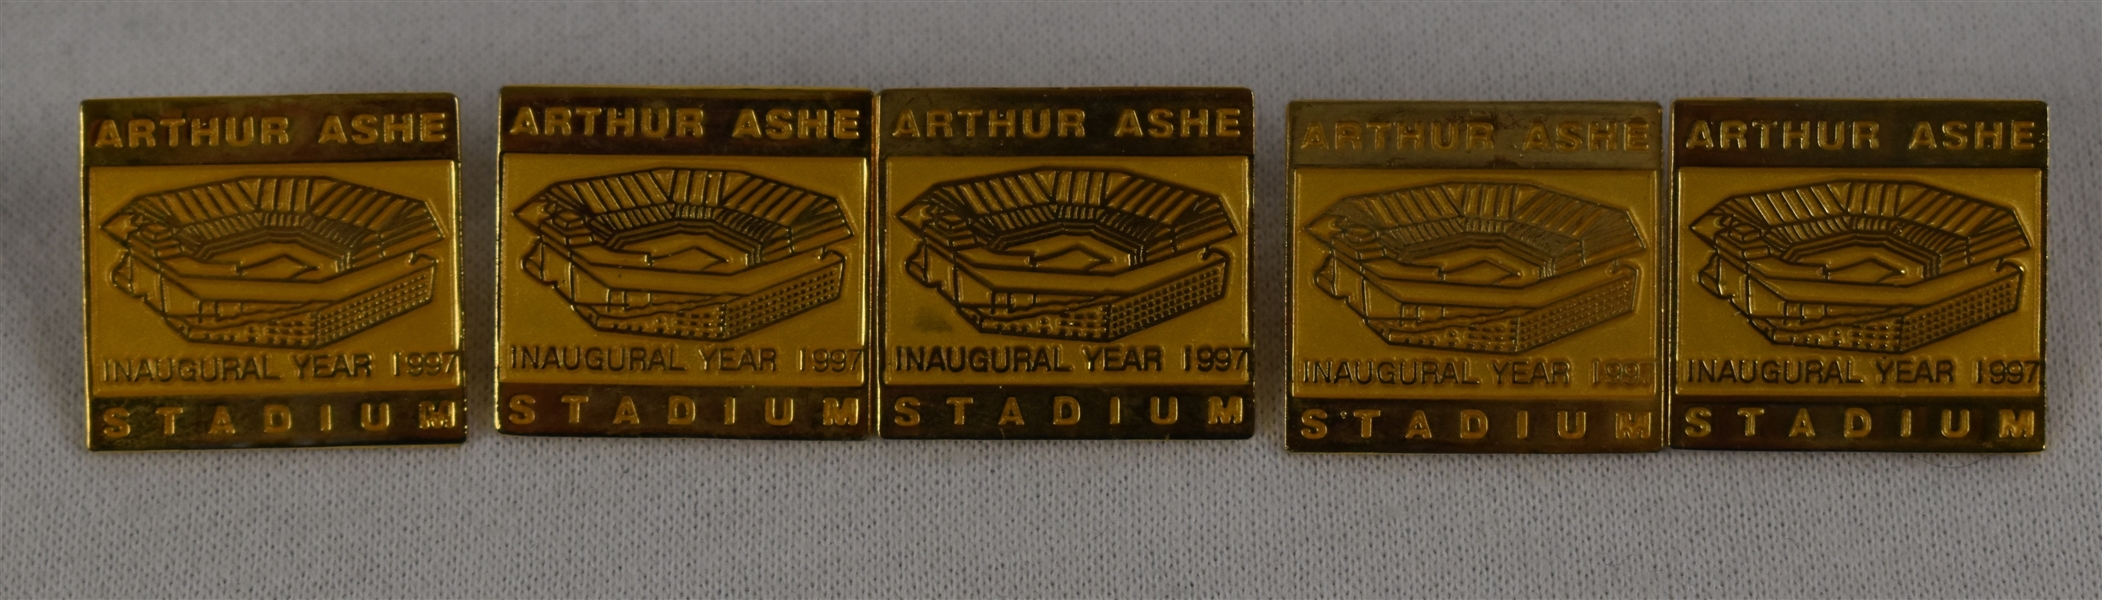 Arthur Ashe Lot of 5 Tennis Pins